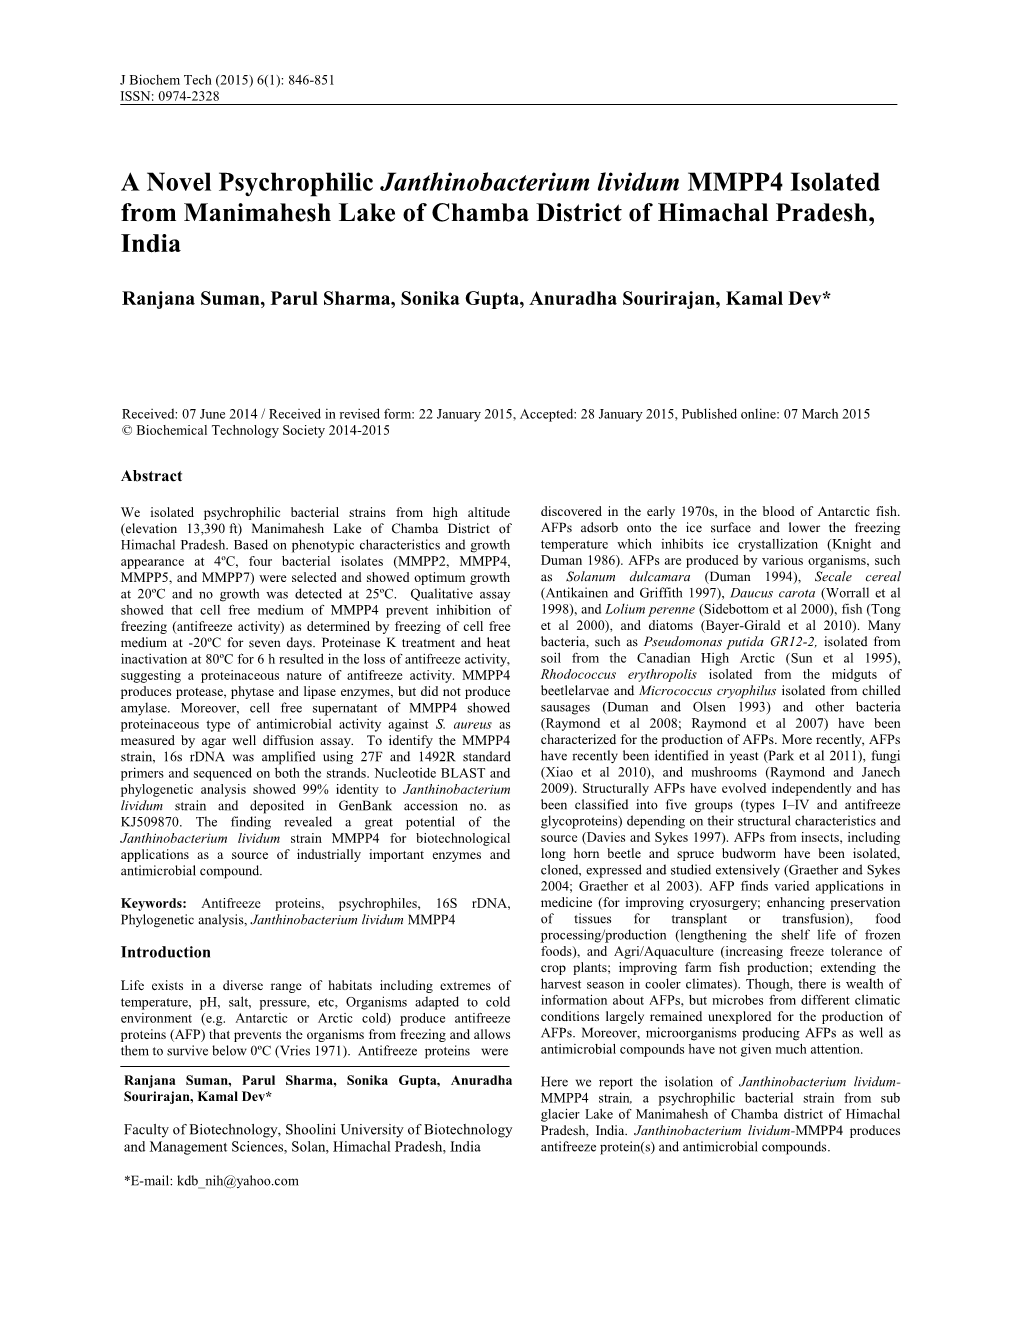 A Novel Psychrophilic Janthinobacterium Lividum MMPP4 Isolated from Manimahesh Lake of Chamba District of Himachal Pradesh, Indi